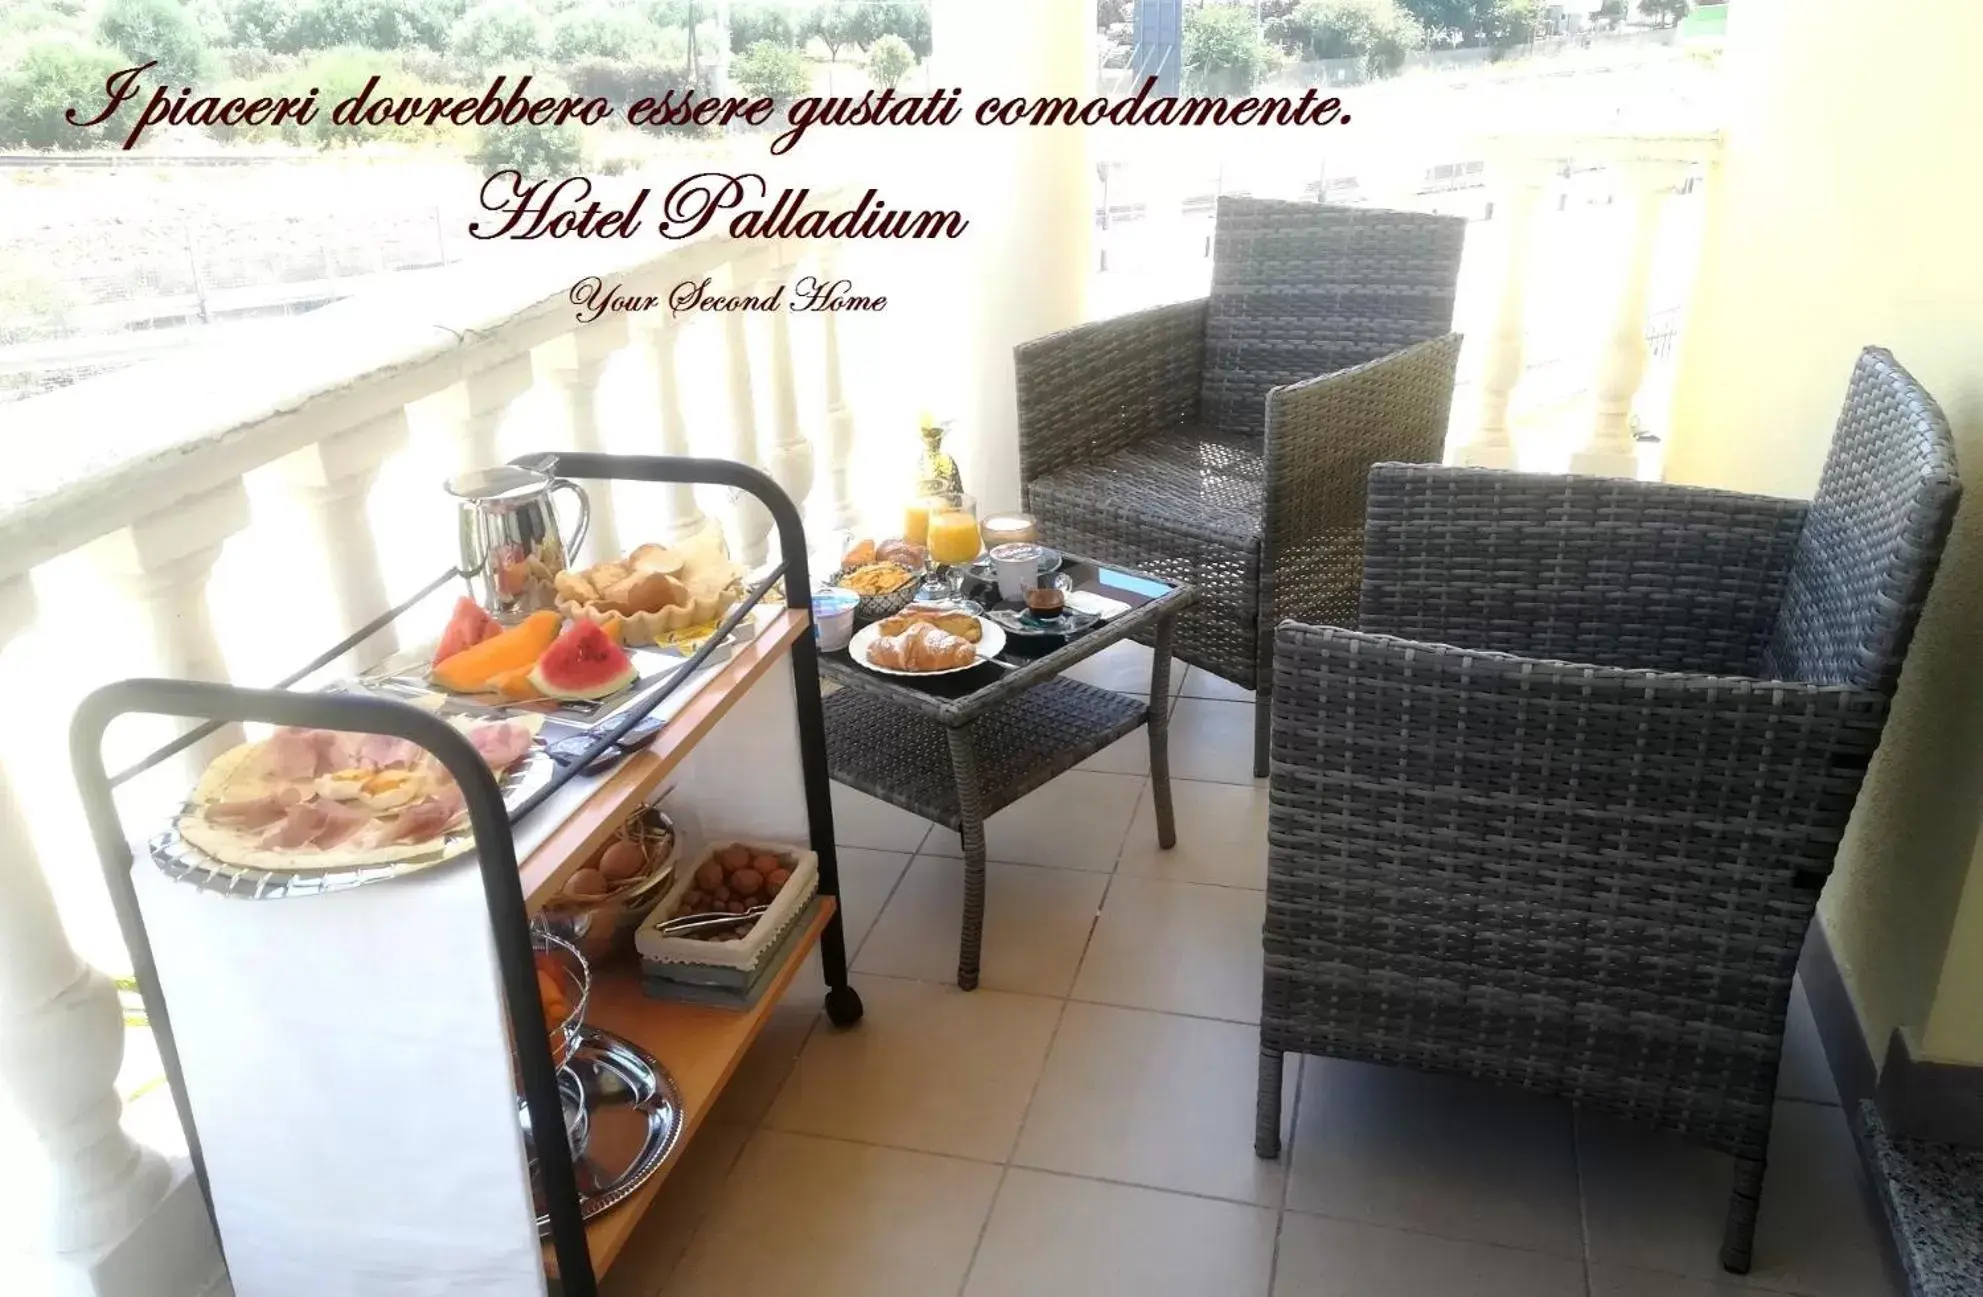 Continental breakfast in Hotel Palladium